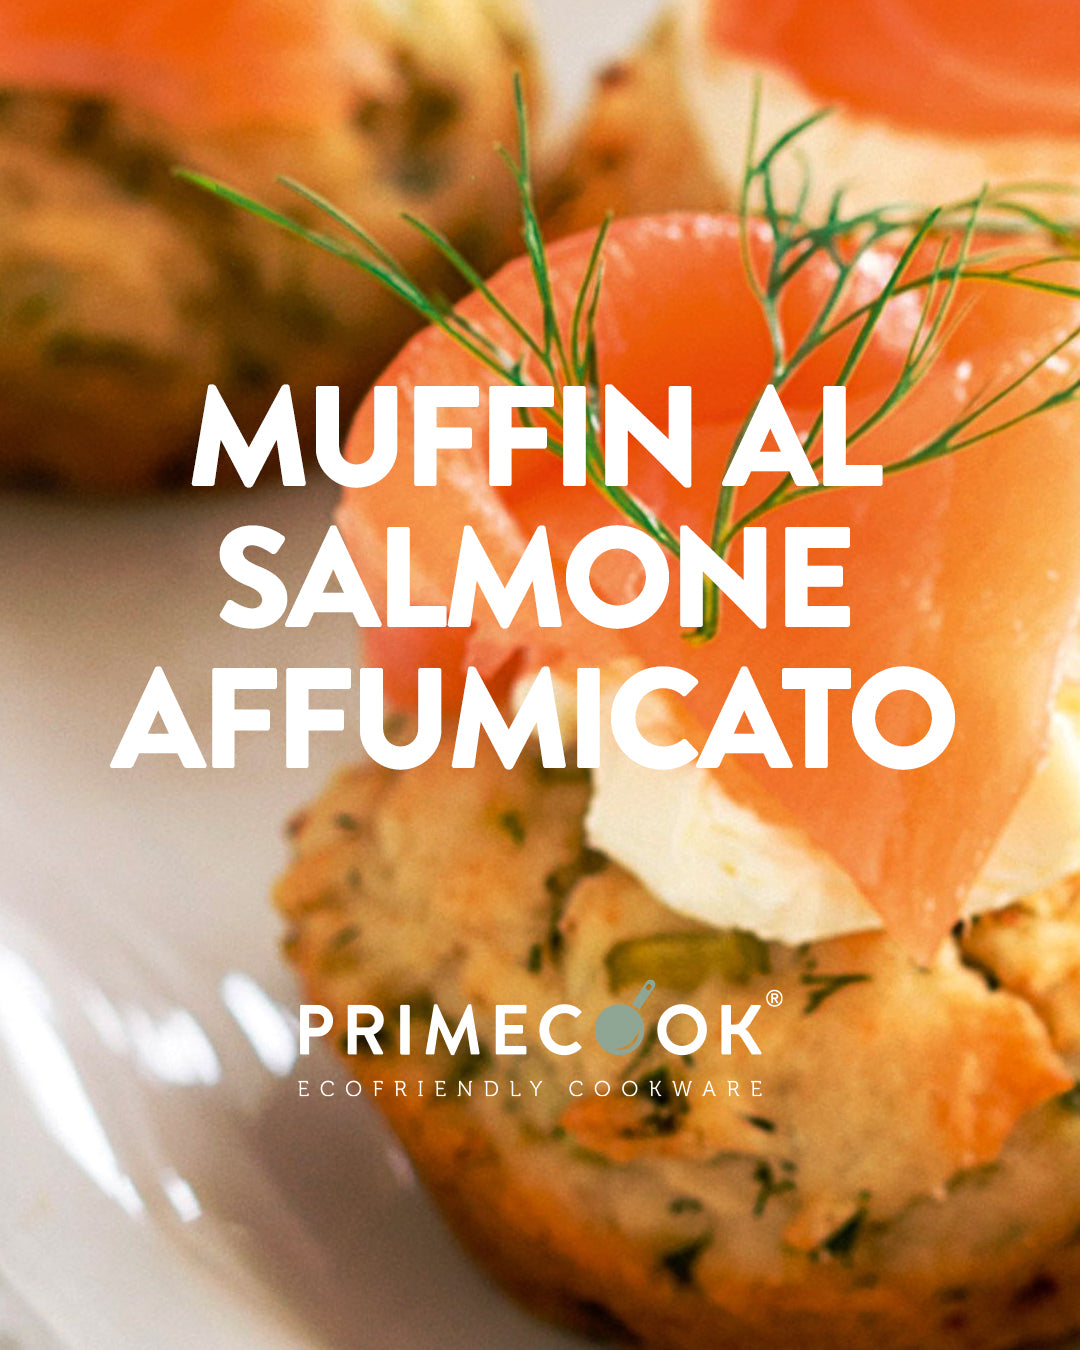 Primecook_Muffin al salmone